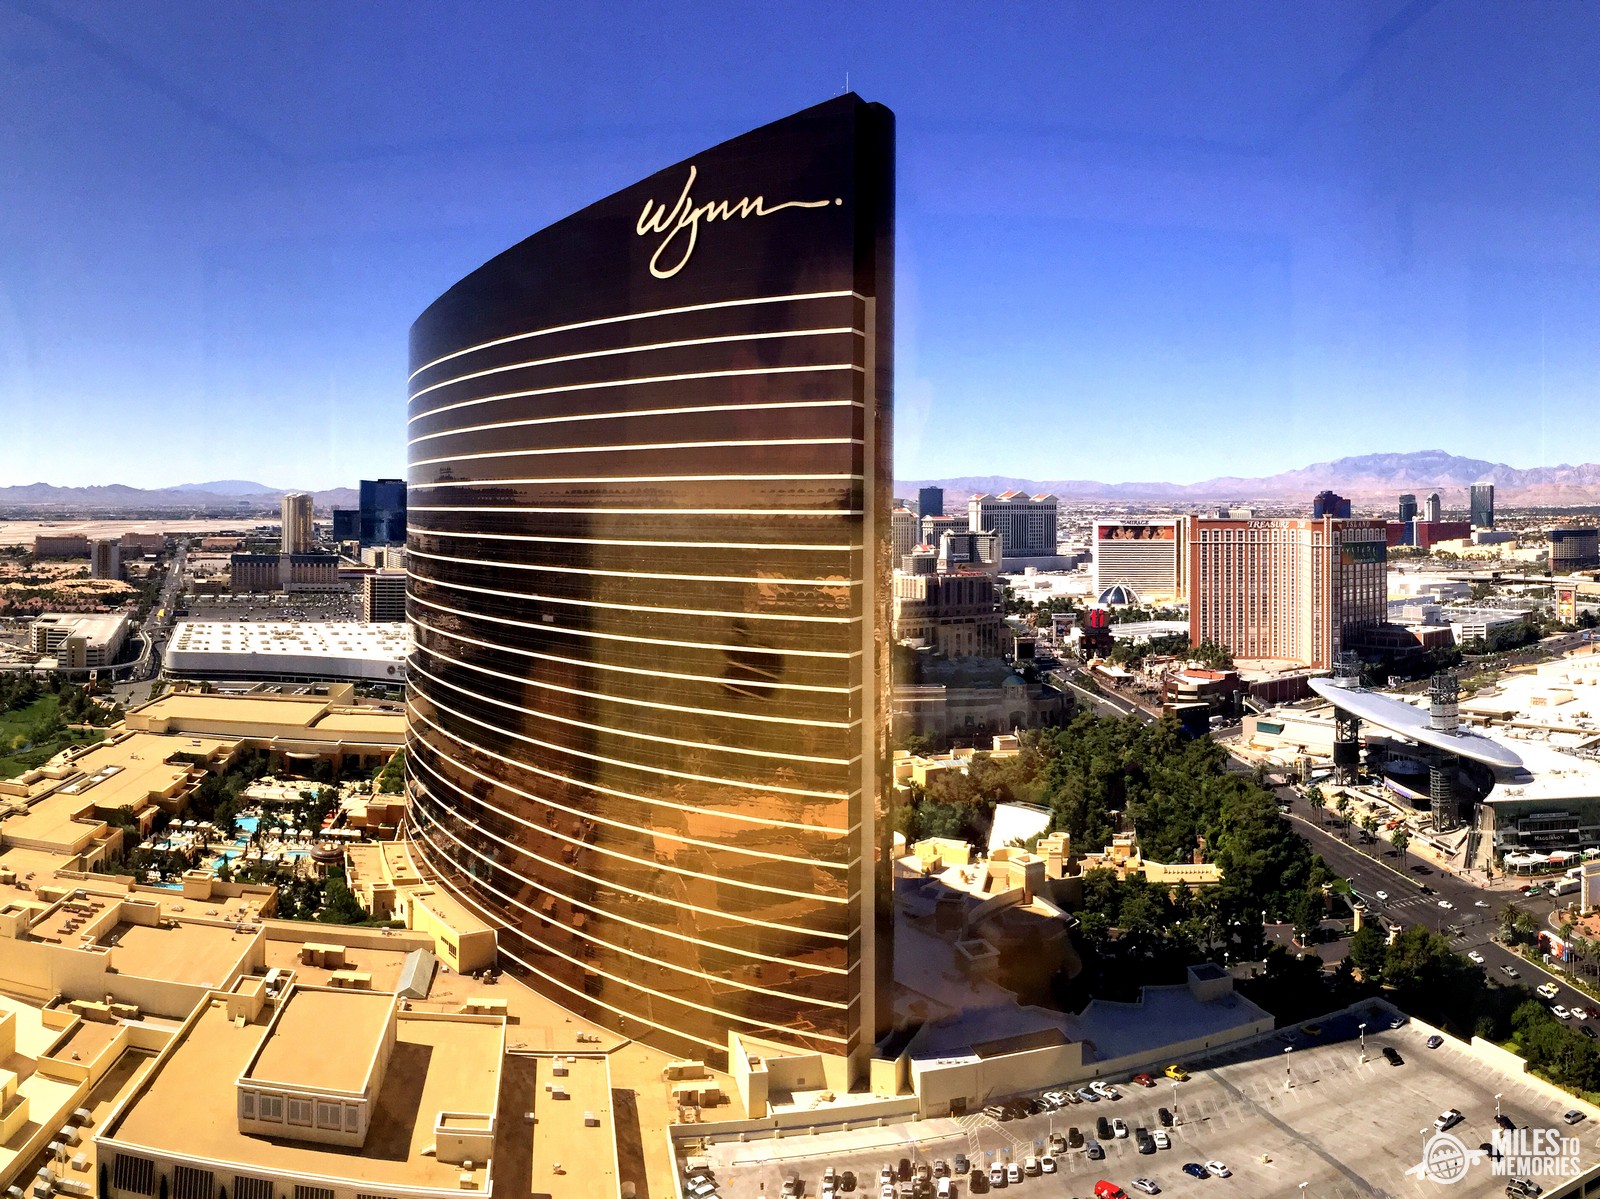 Win Hotel Las Vegas